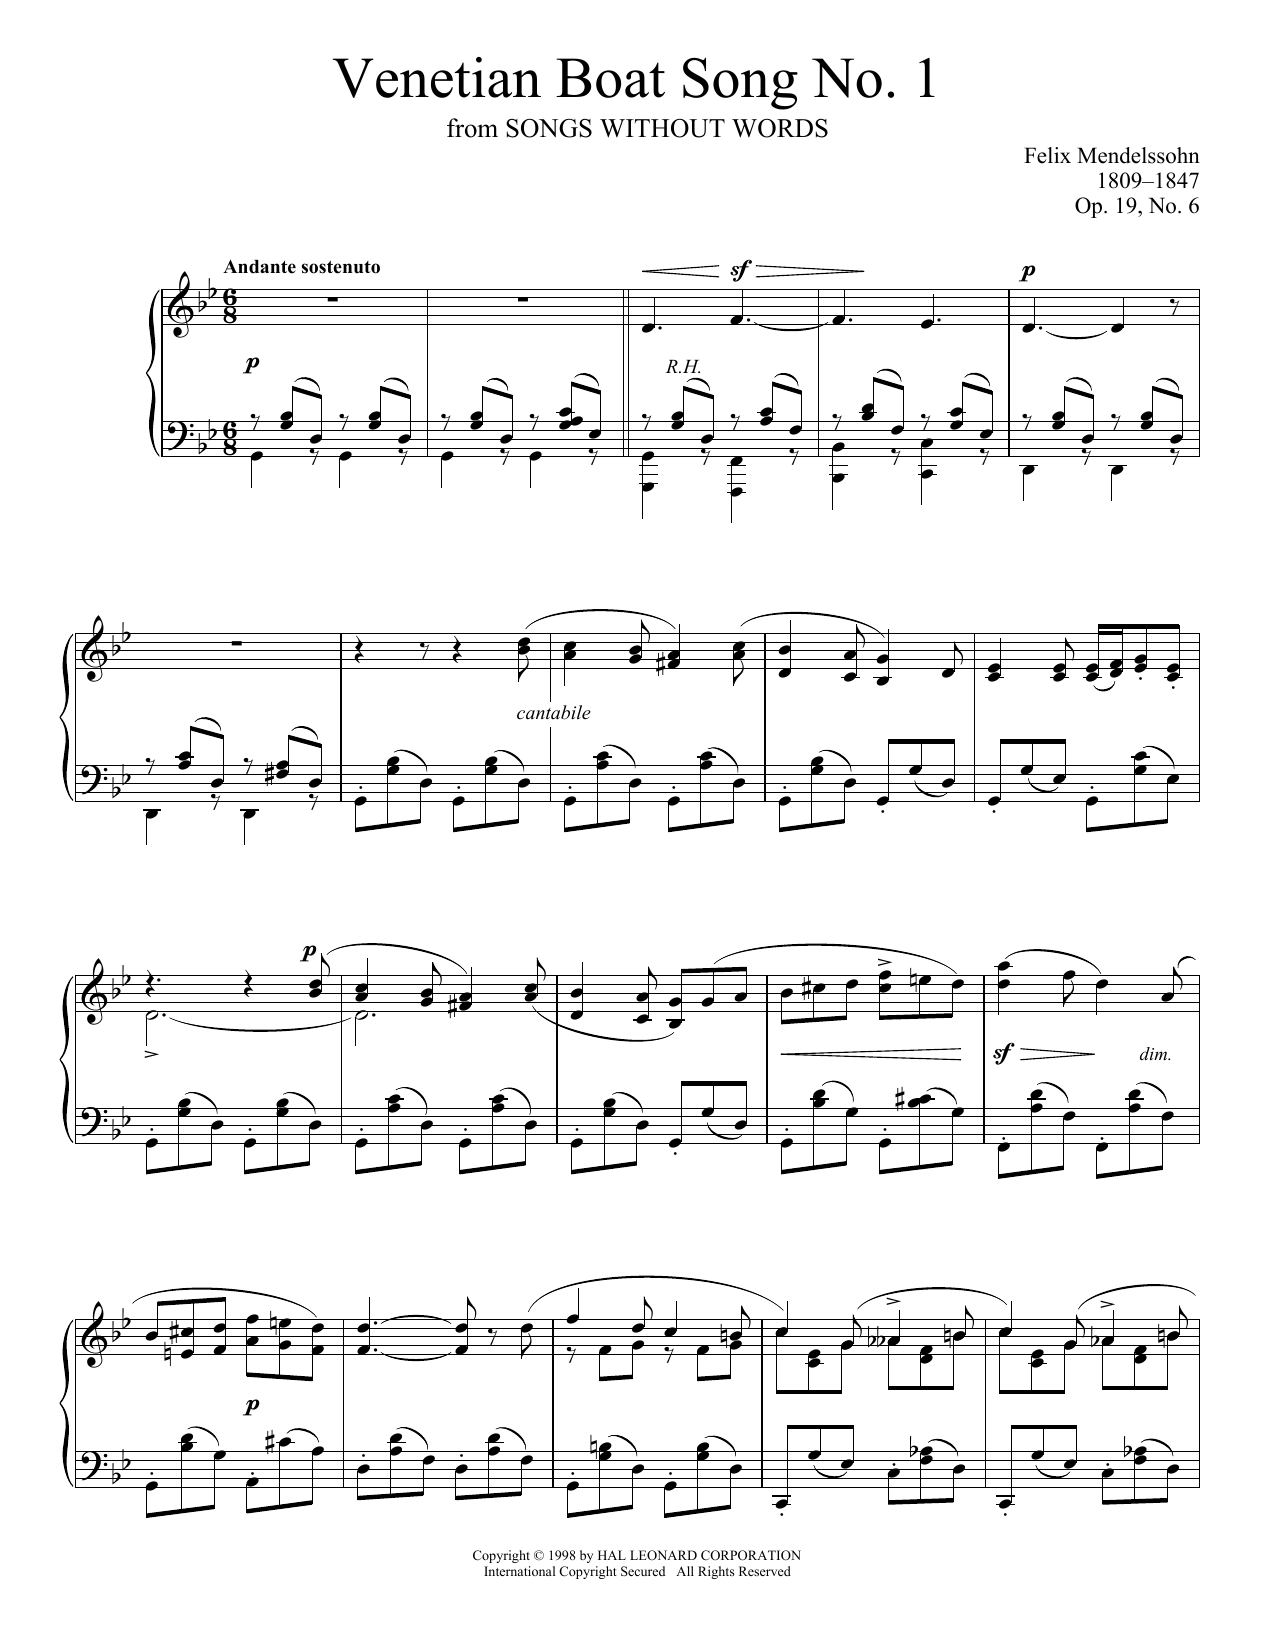 Download Felix Mendelssohn Venetian Boat Song No. 1, Op. 19, No. 6 Sheet Music